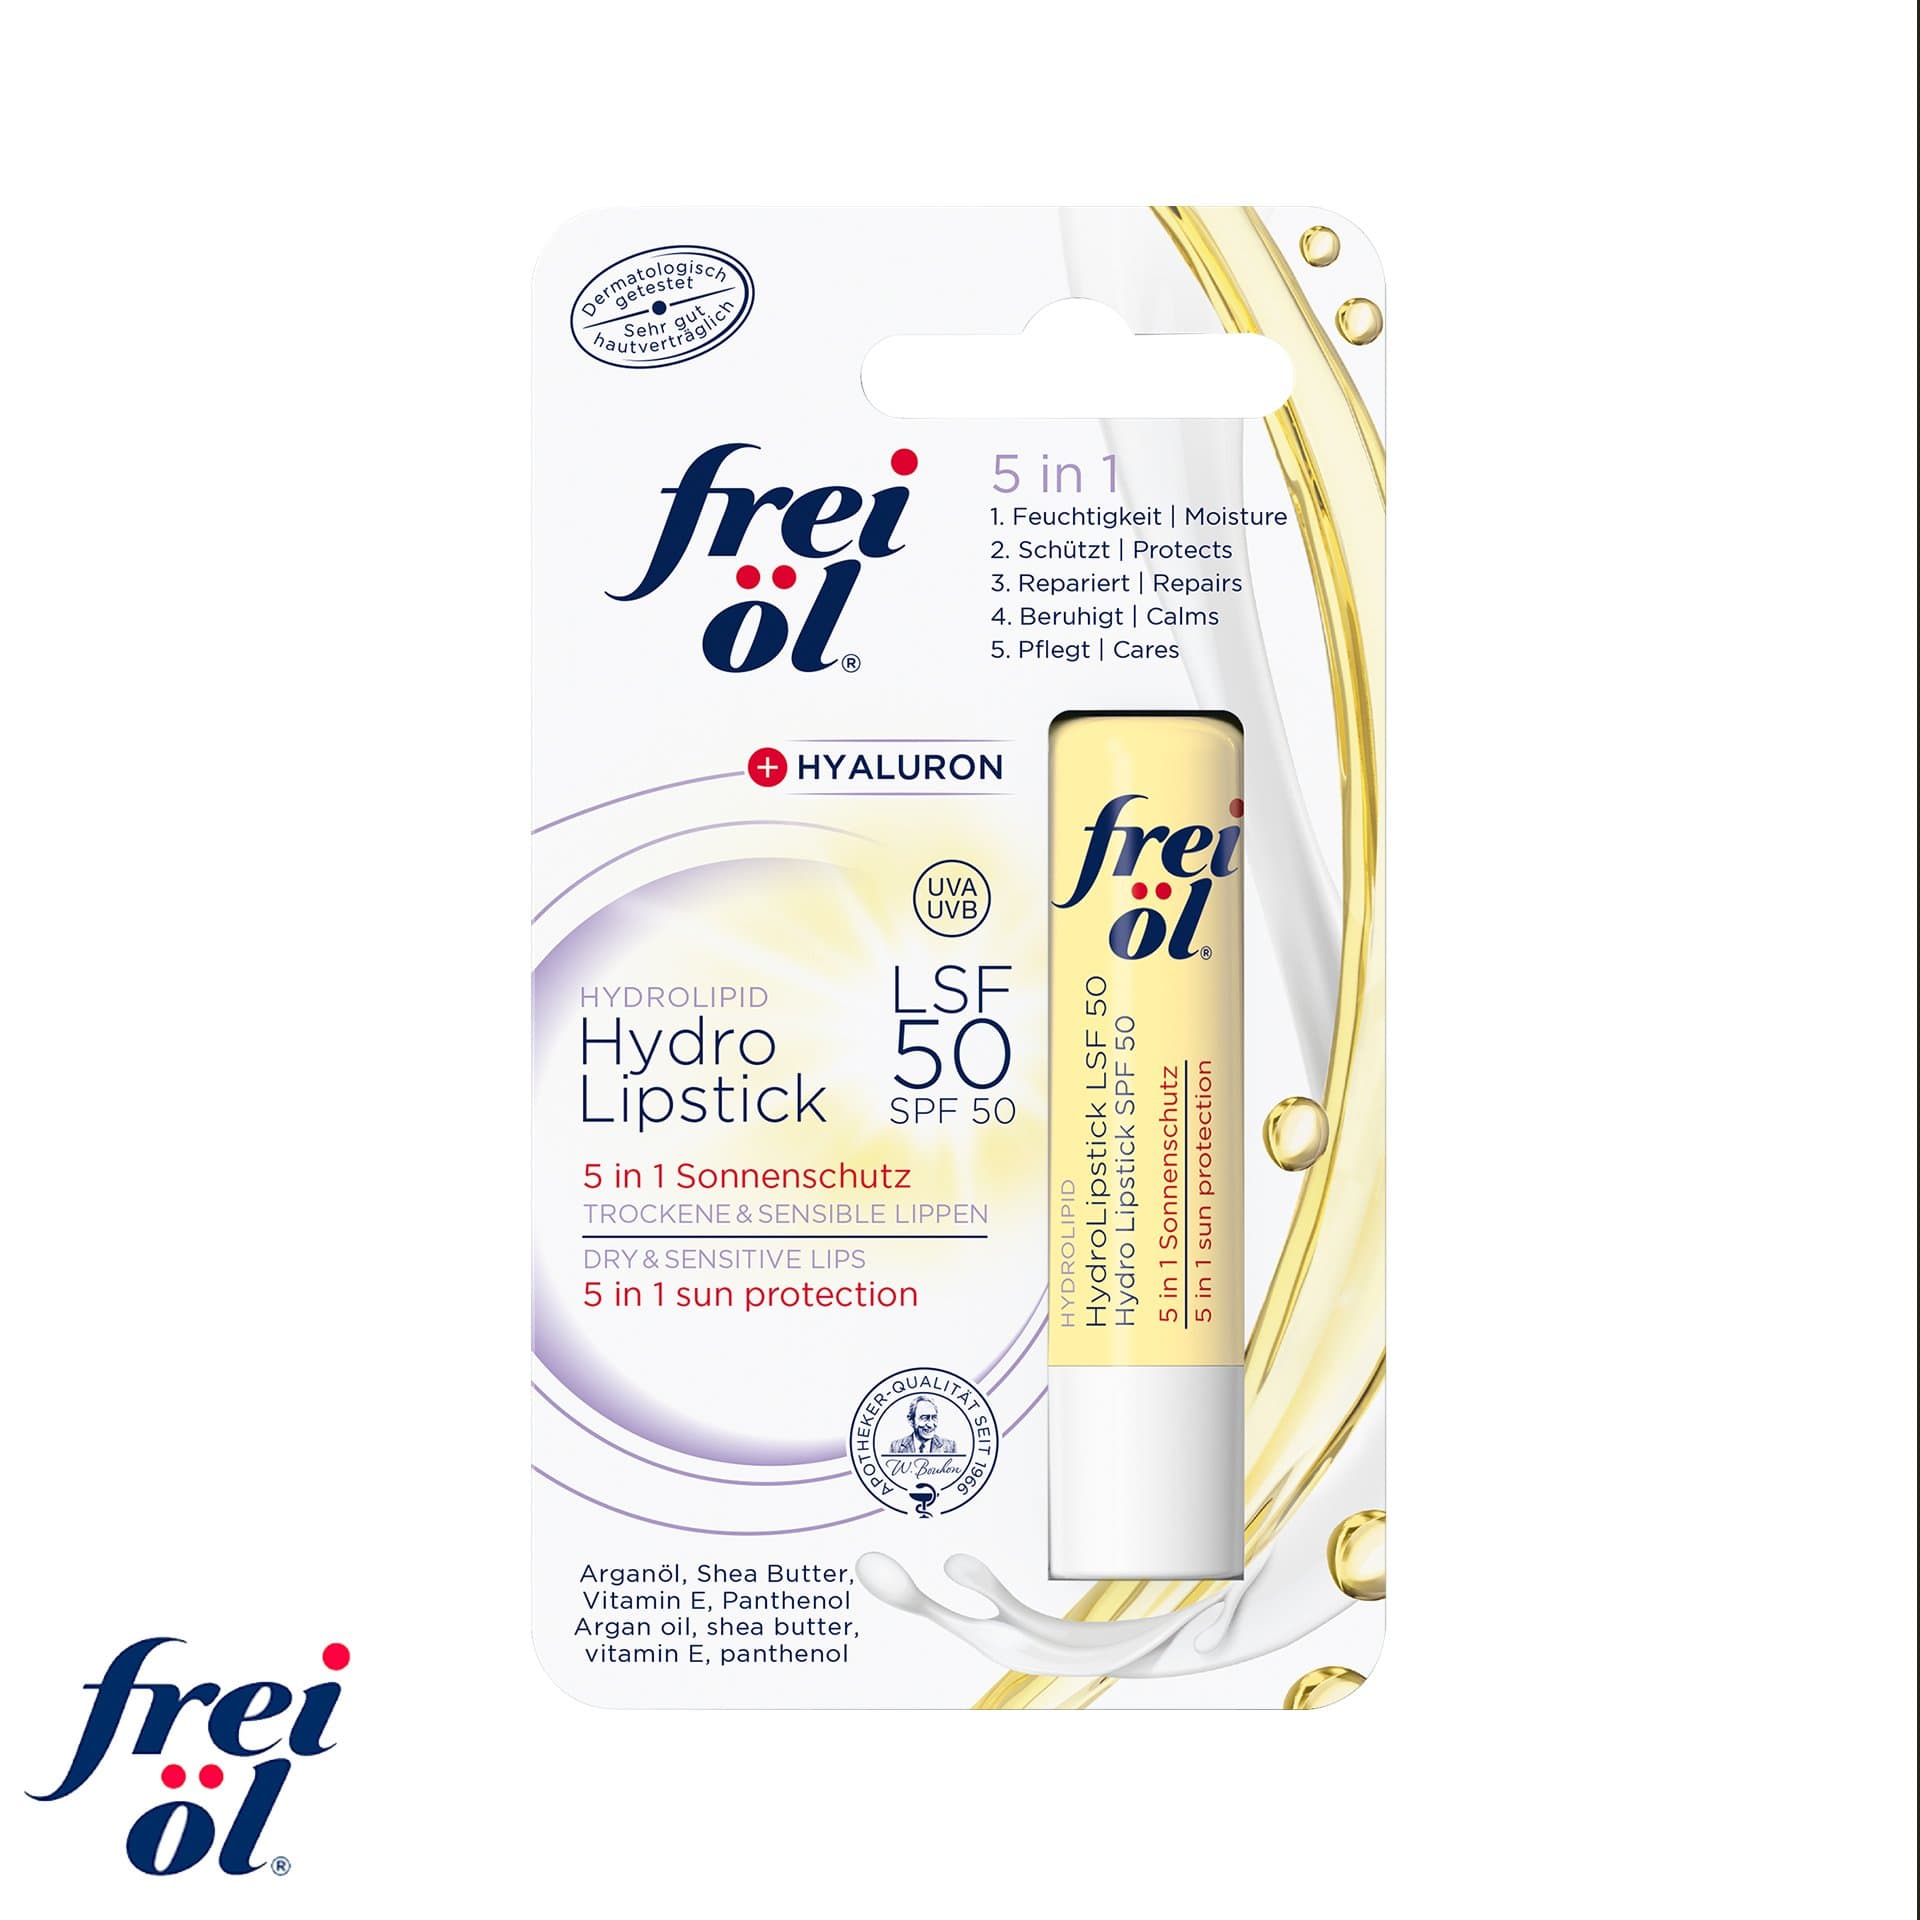 Frei Ol Hydrolipid Hydro Lipstick SPF 50